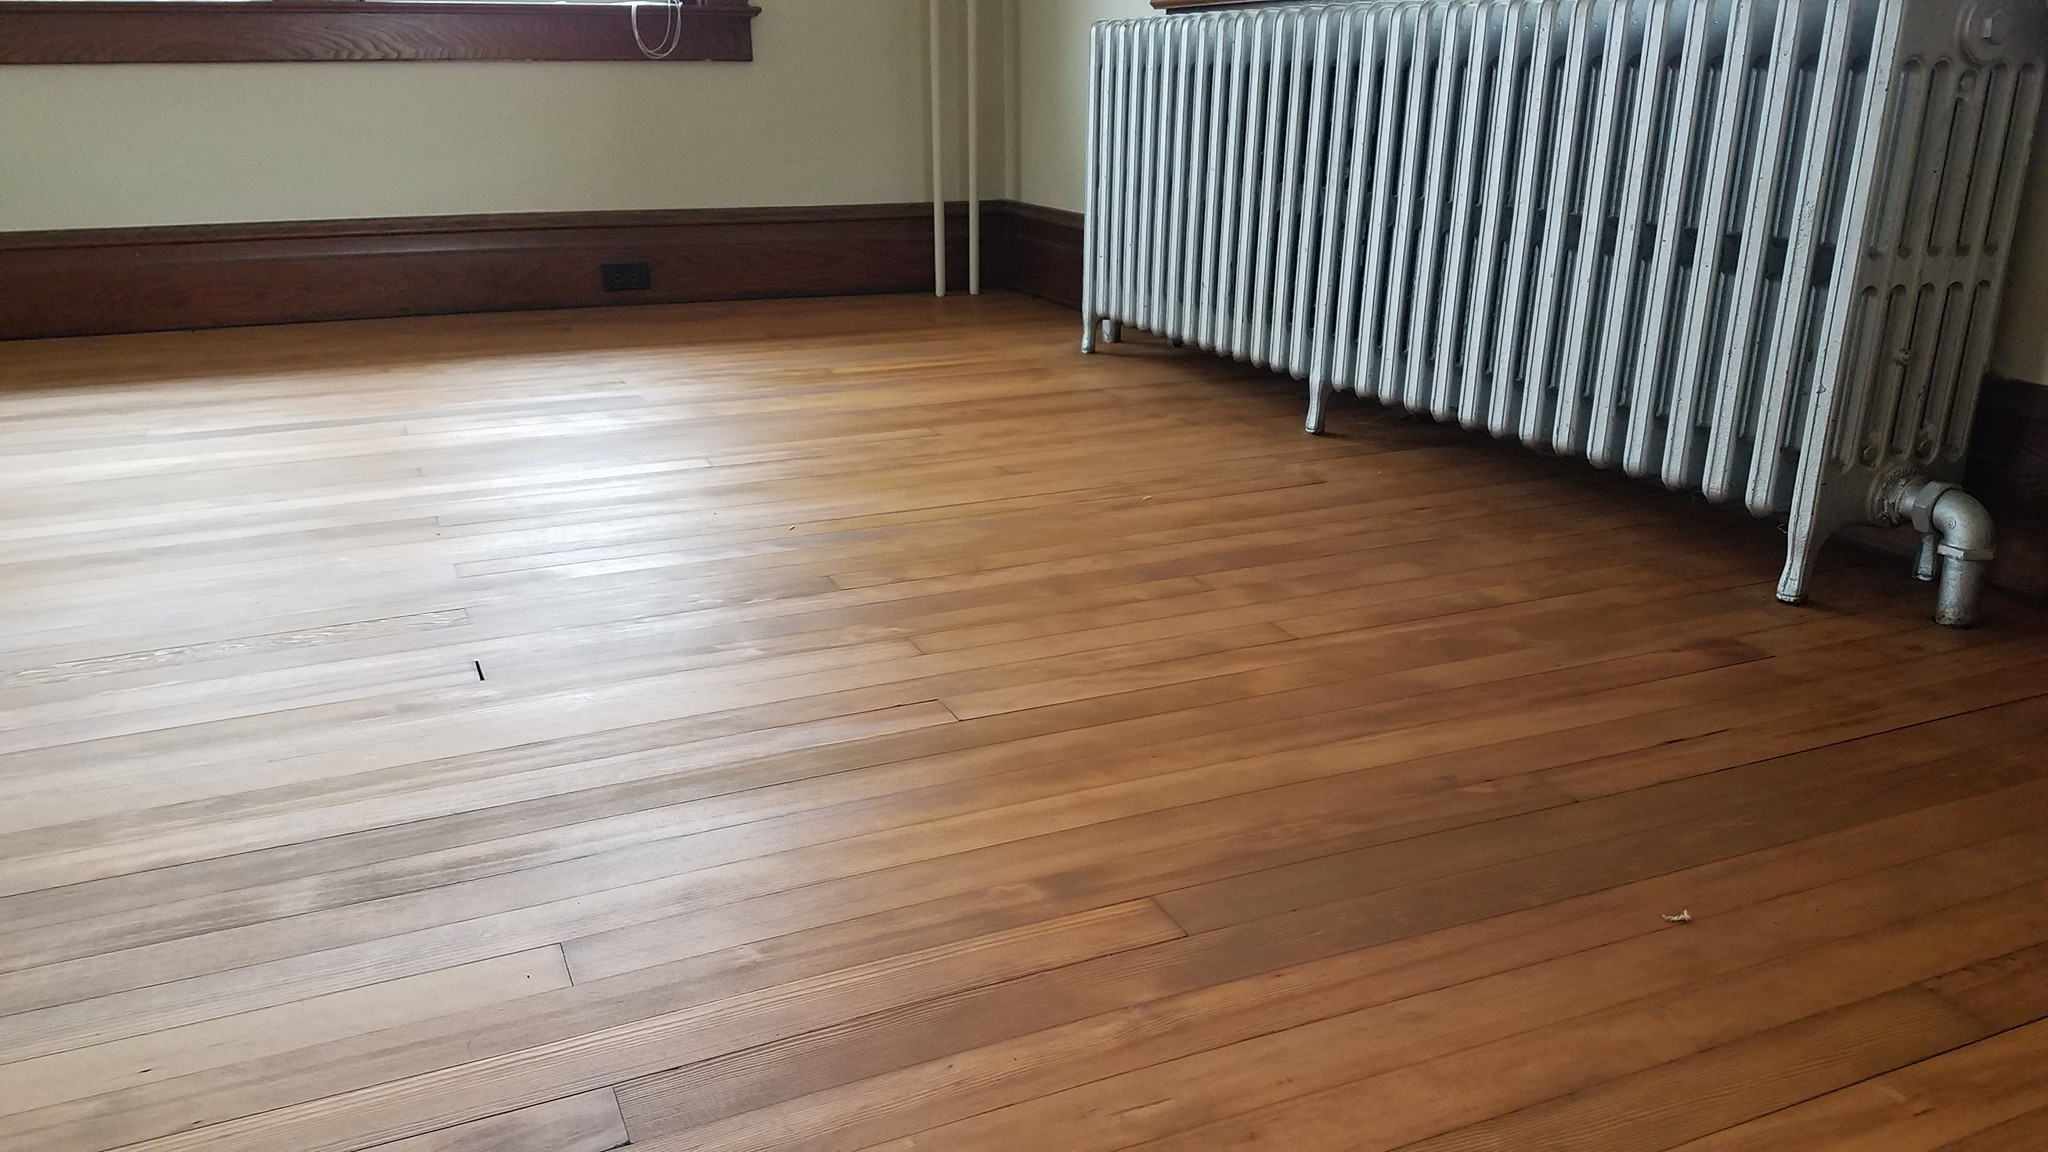 hardwood floor refinishing lancaster pa of vintage wood flooring regarding 18192487 1622452841115889 4874100895389868825 o